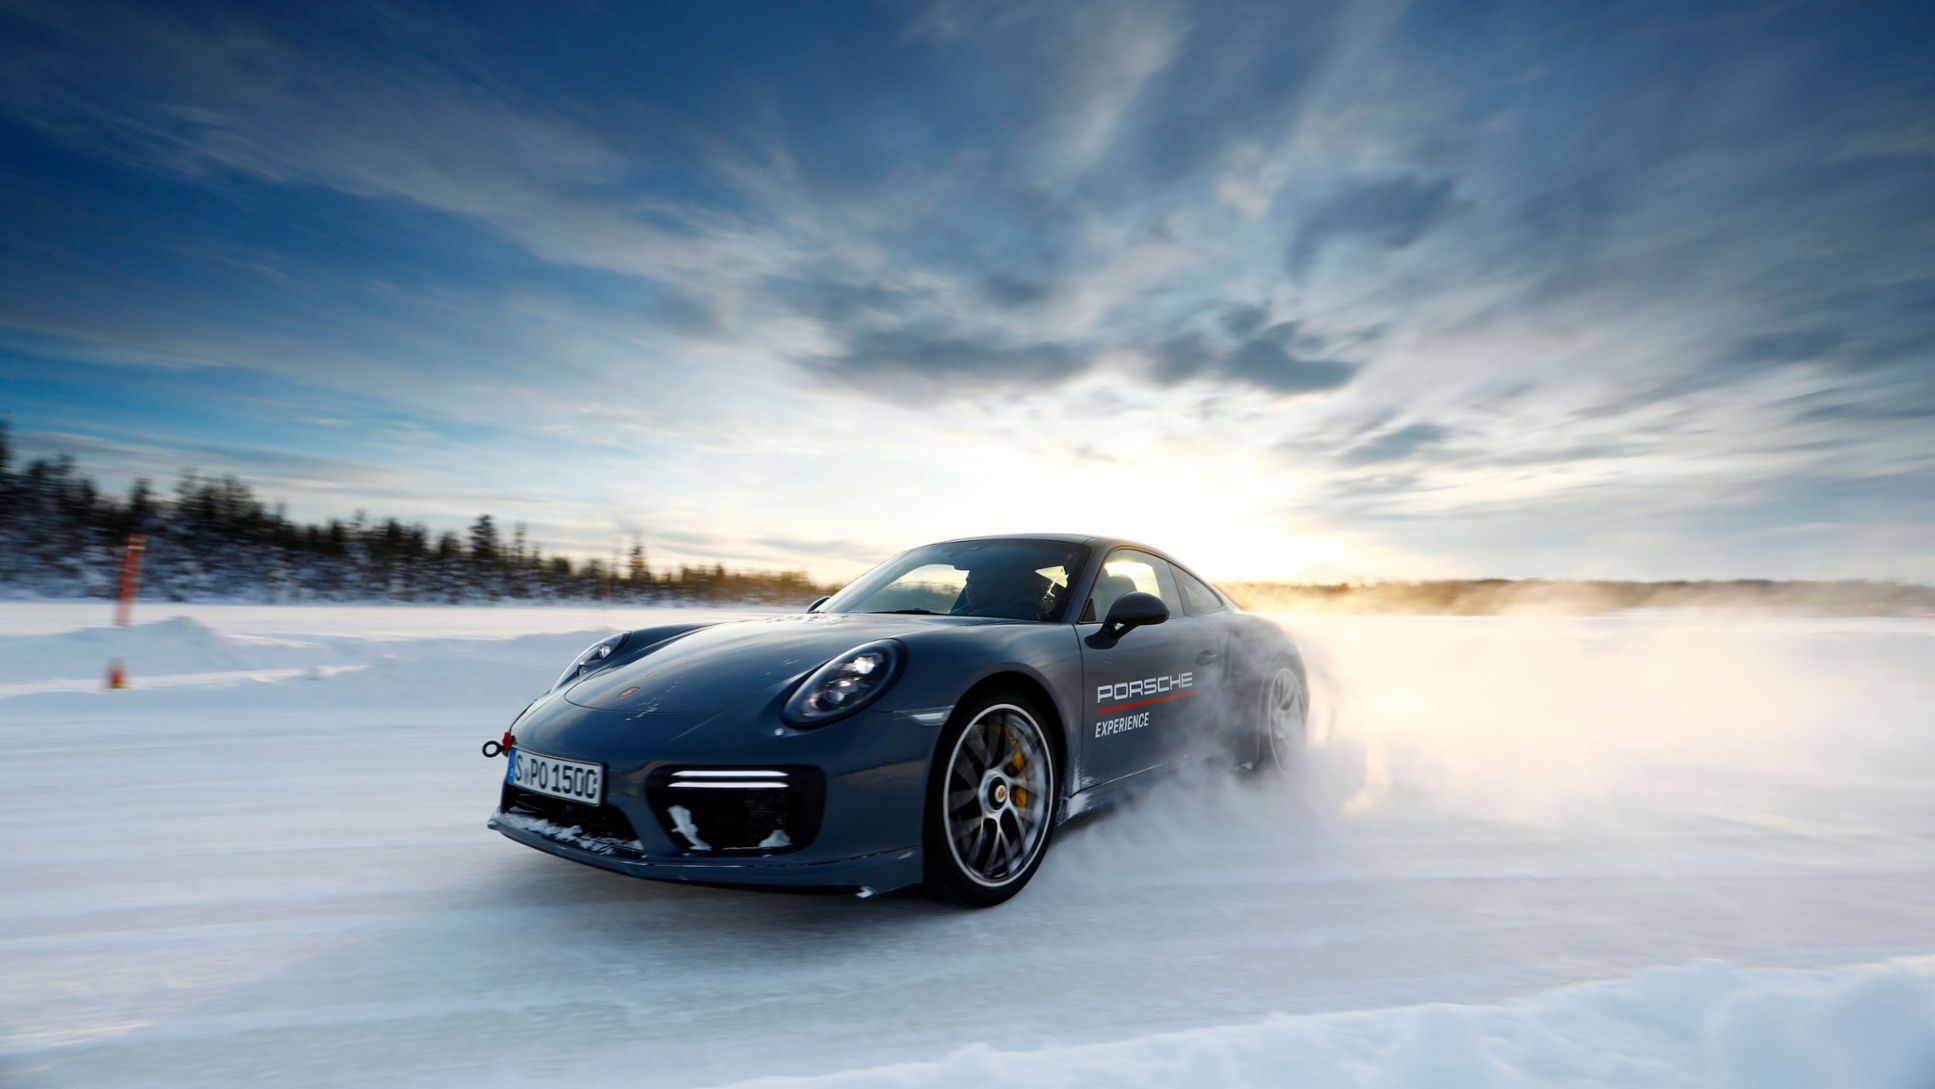 911 Turbo S, Porsche Ice Experience, Levi, Finland, 2018, Porsche AG